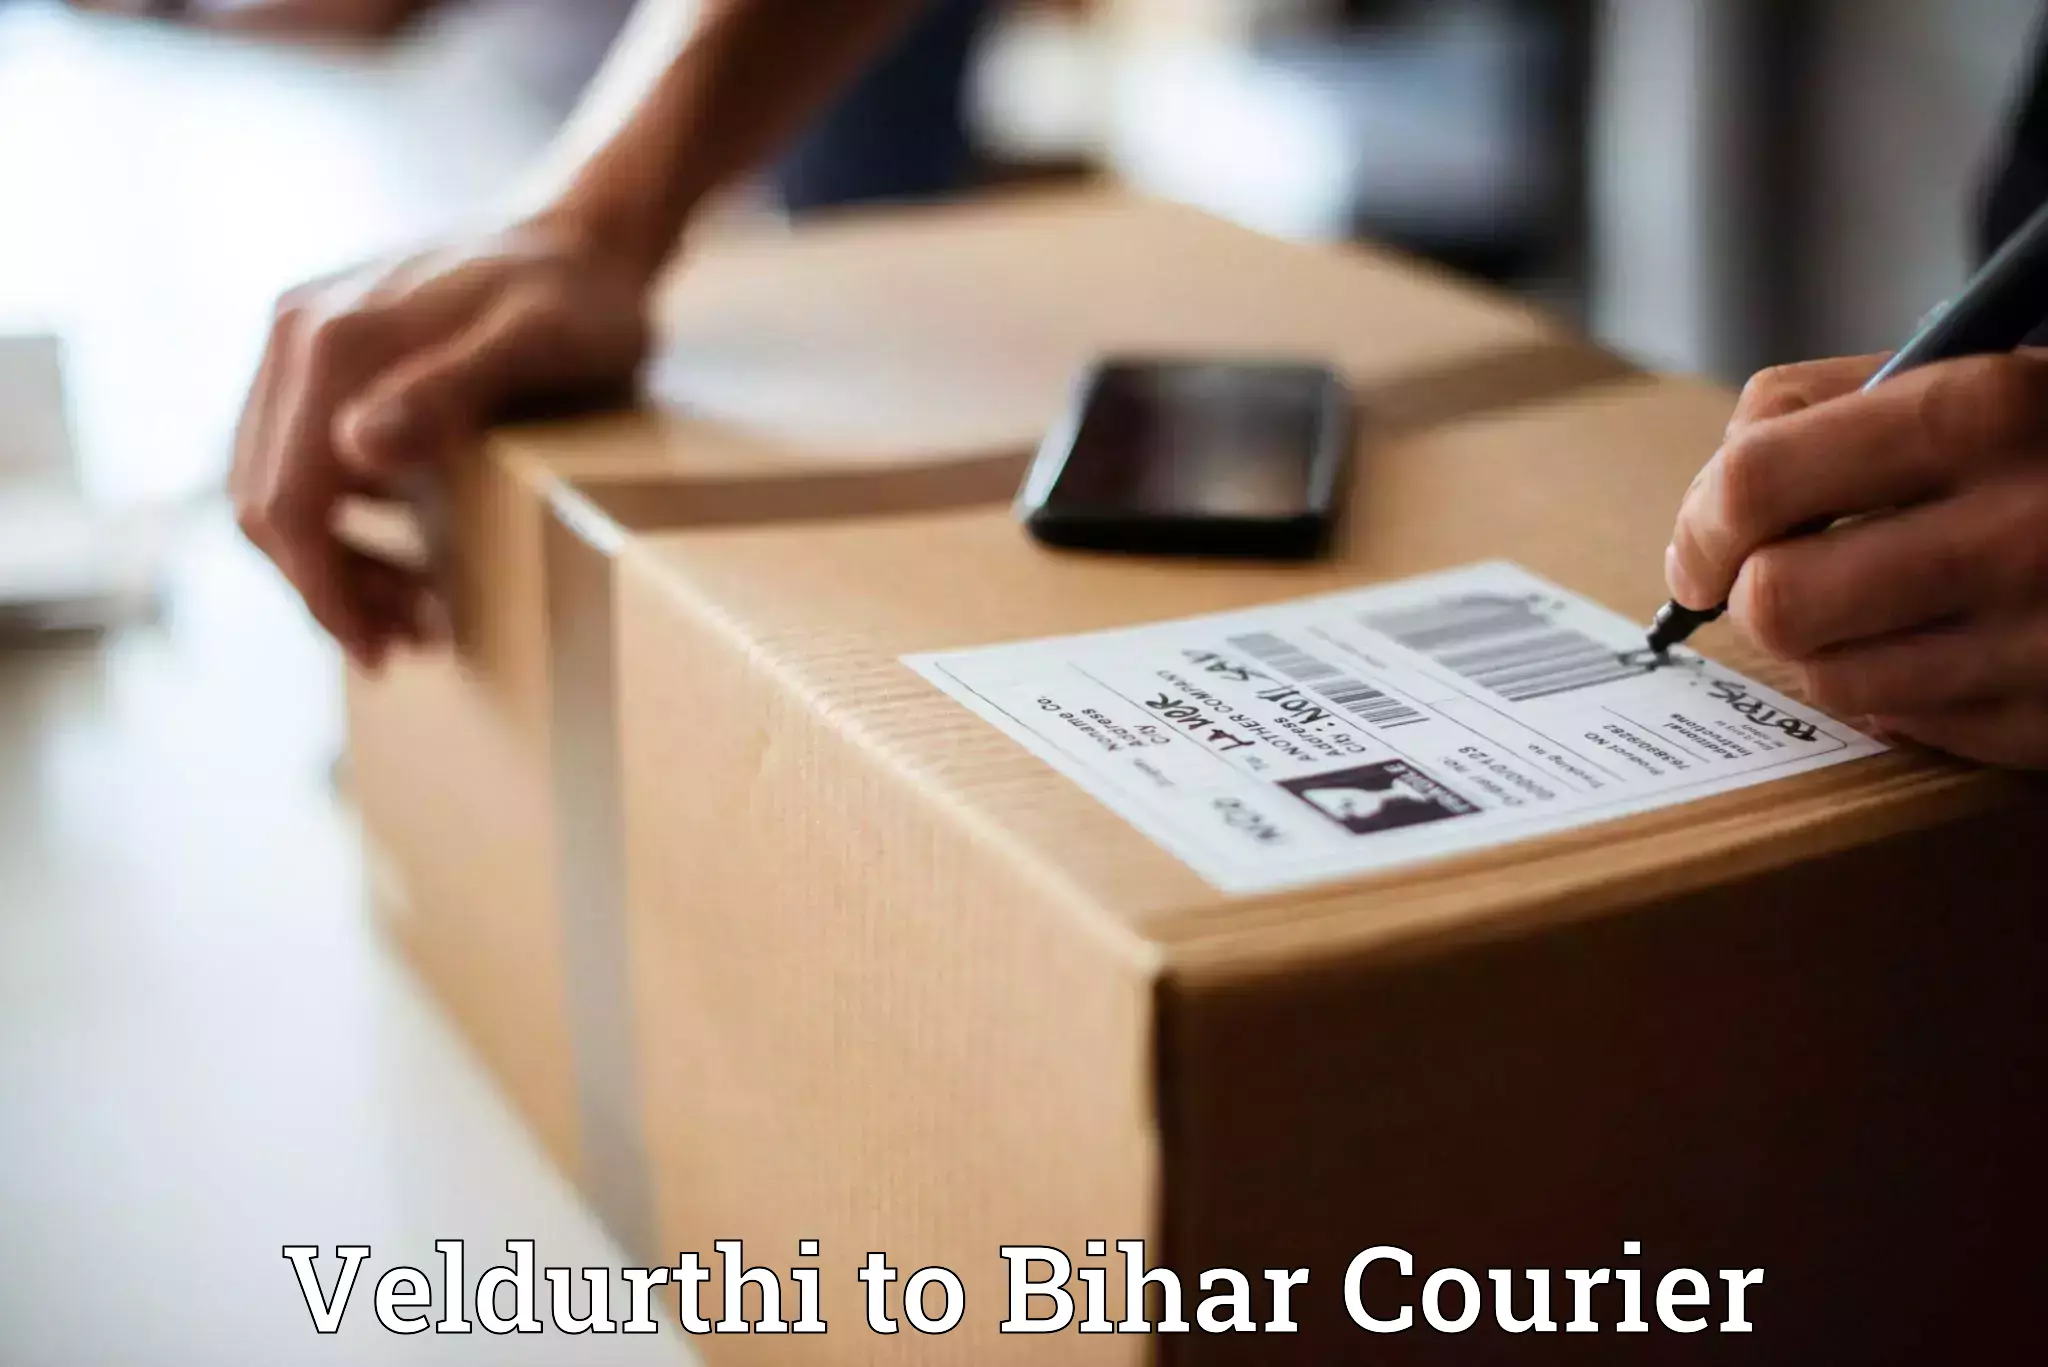 State-of-the-art courier technology Veldurthi to Purnia